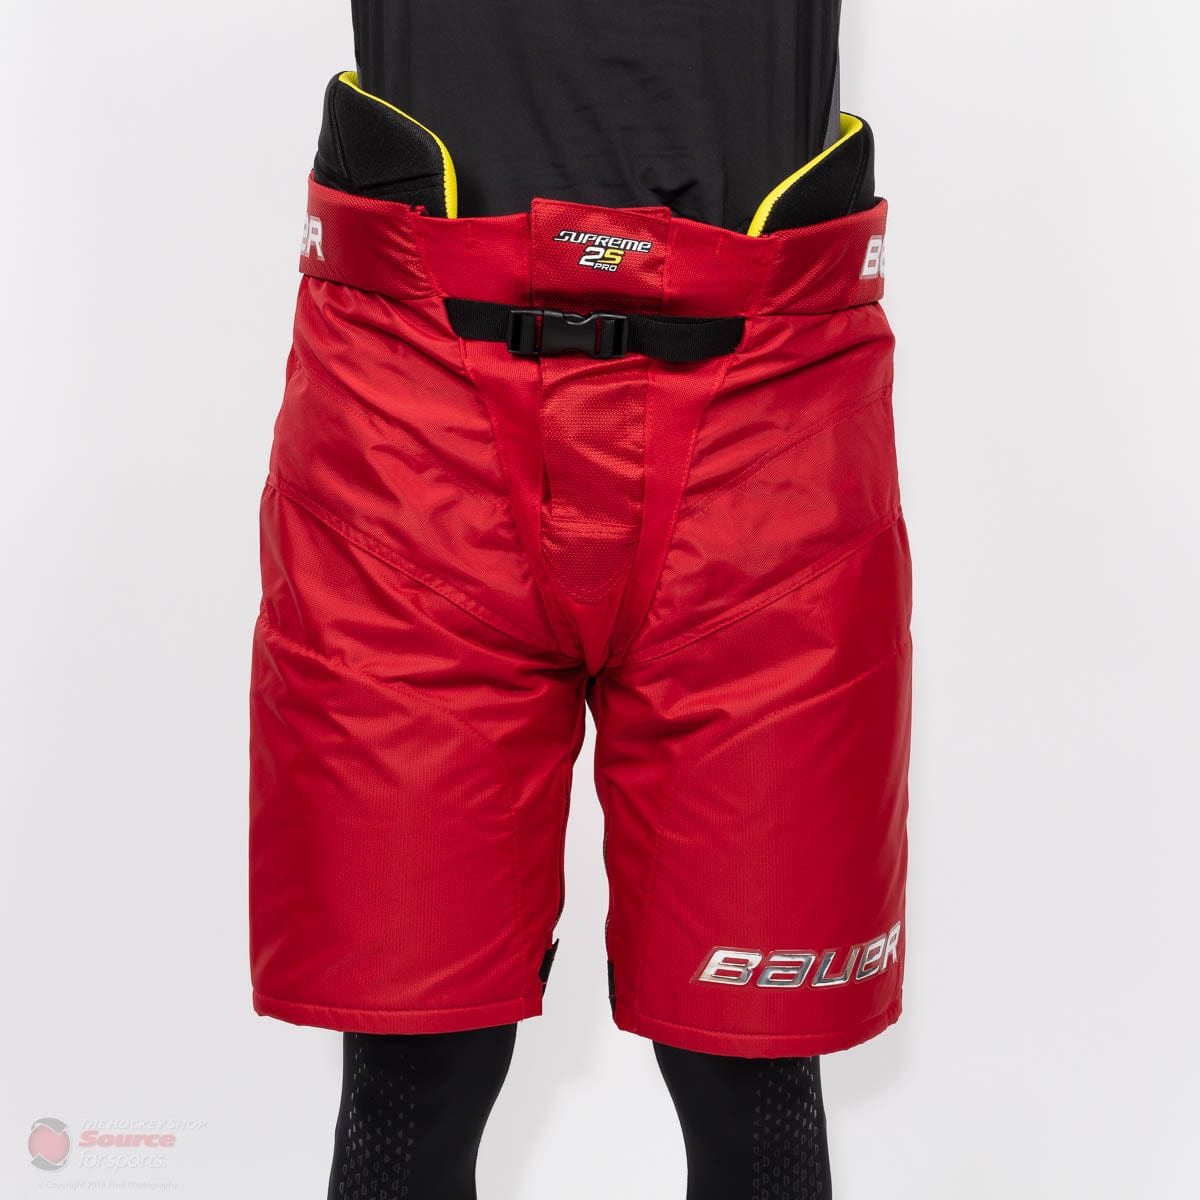 Bauer Supreme 2S Pro Junior Hockey Pant Shells